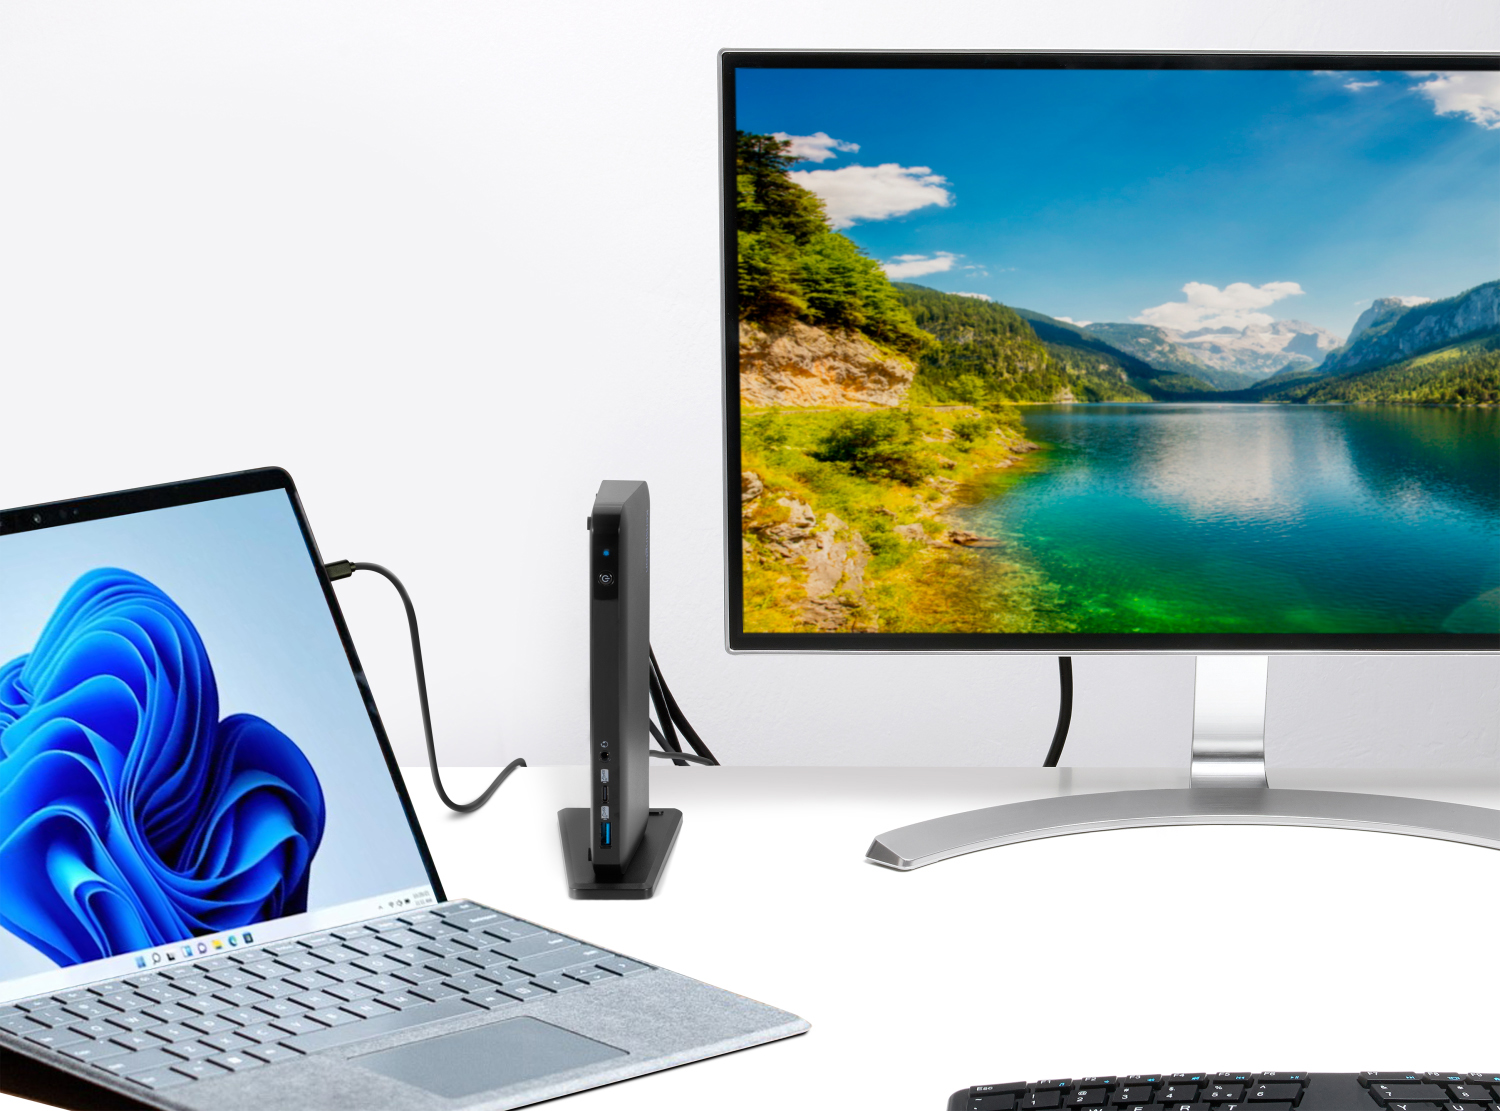 Kensington’s USB-C Docking Station in a desktop setup with Microsoft Surface